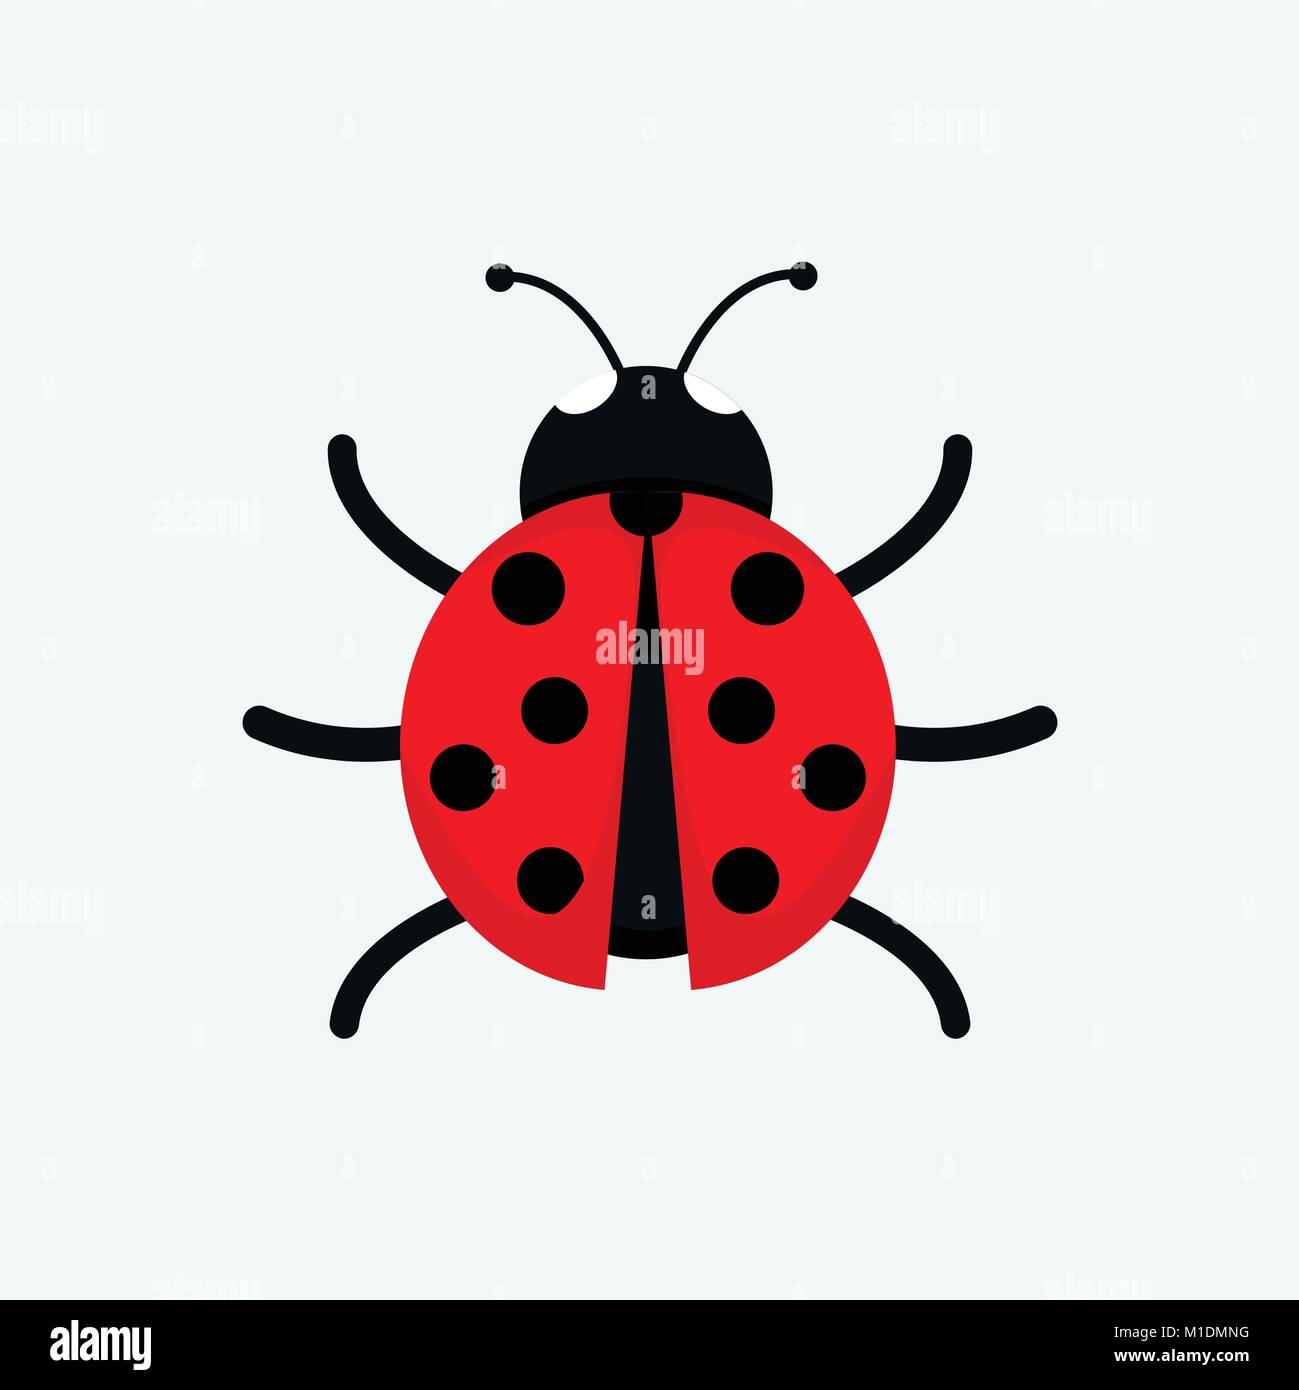 Cute Ladybug Drawing Vector Illustration Graphic Design Stock ...